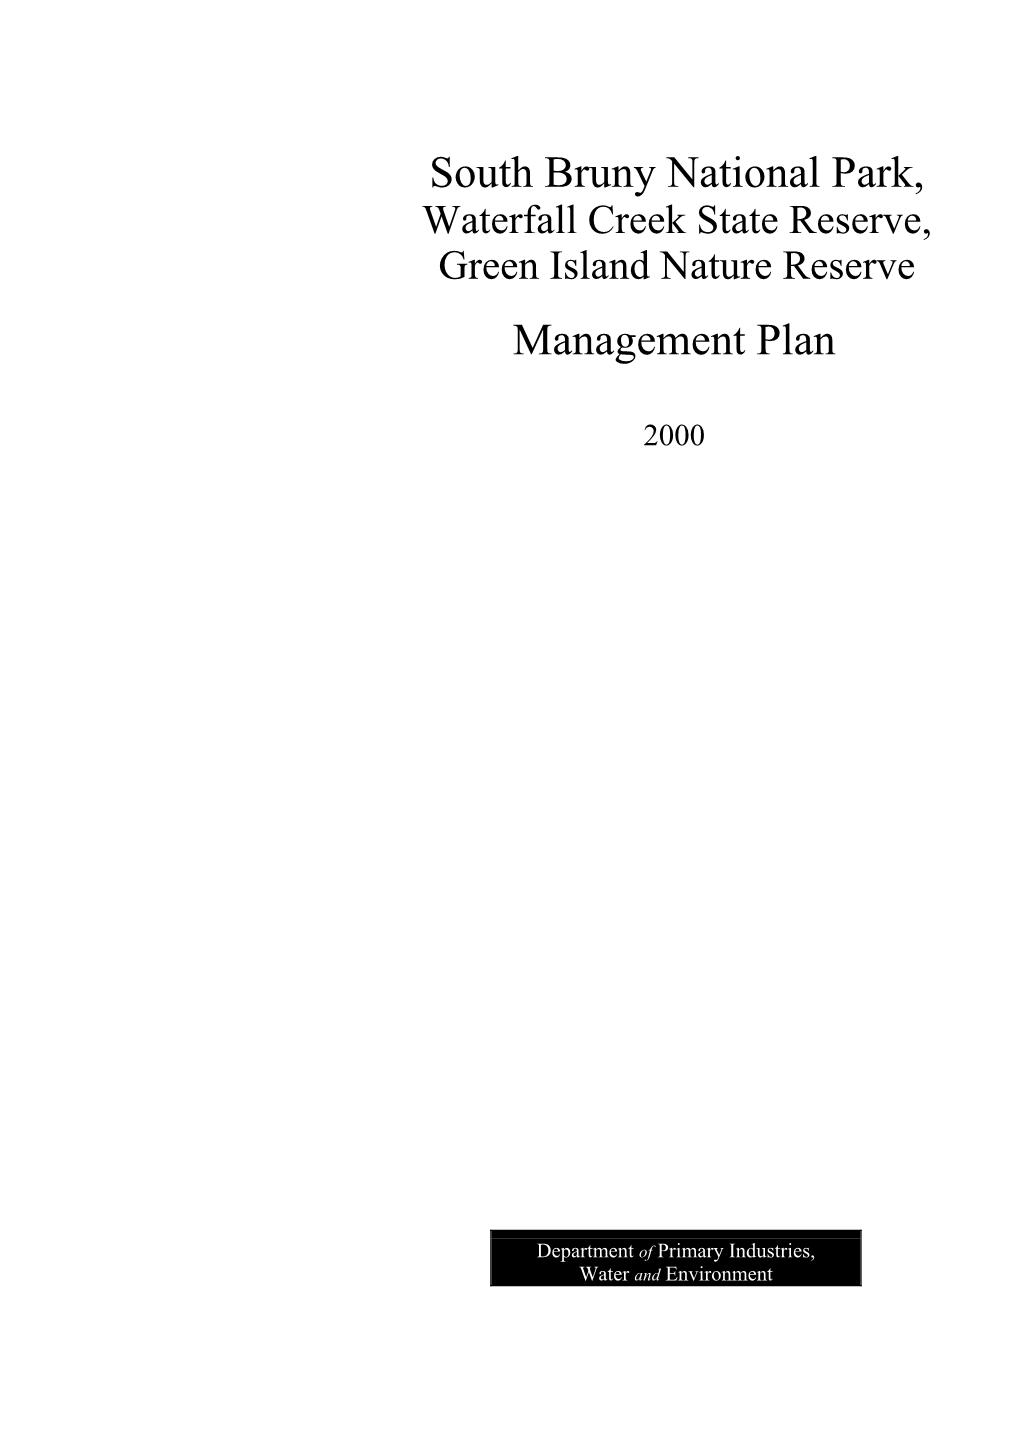 South Bruny National Park, Management Plan